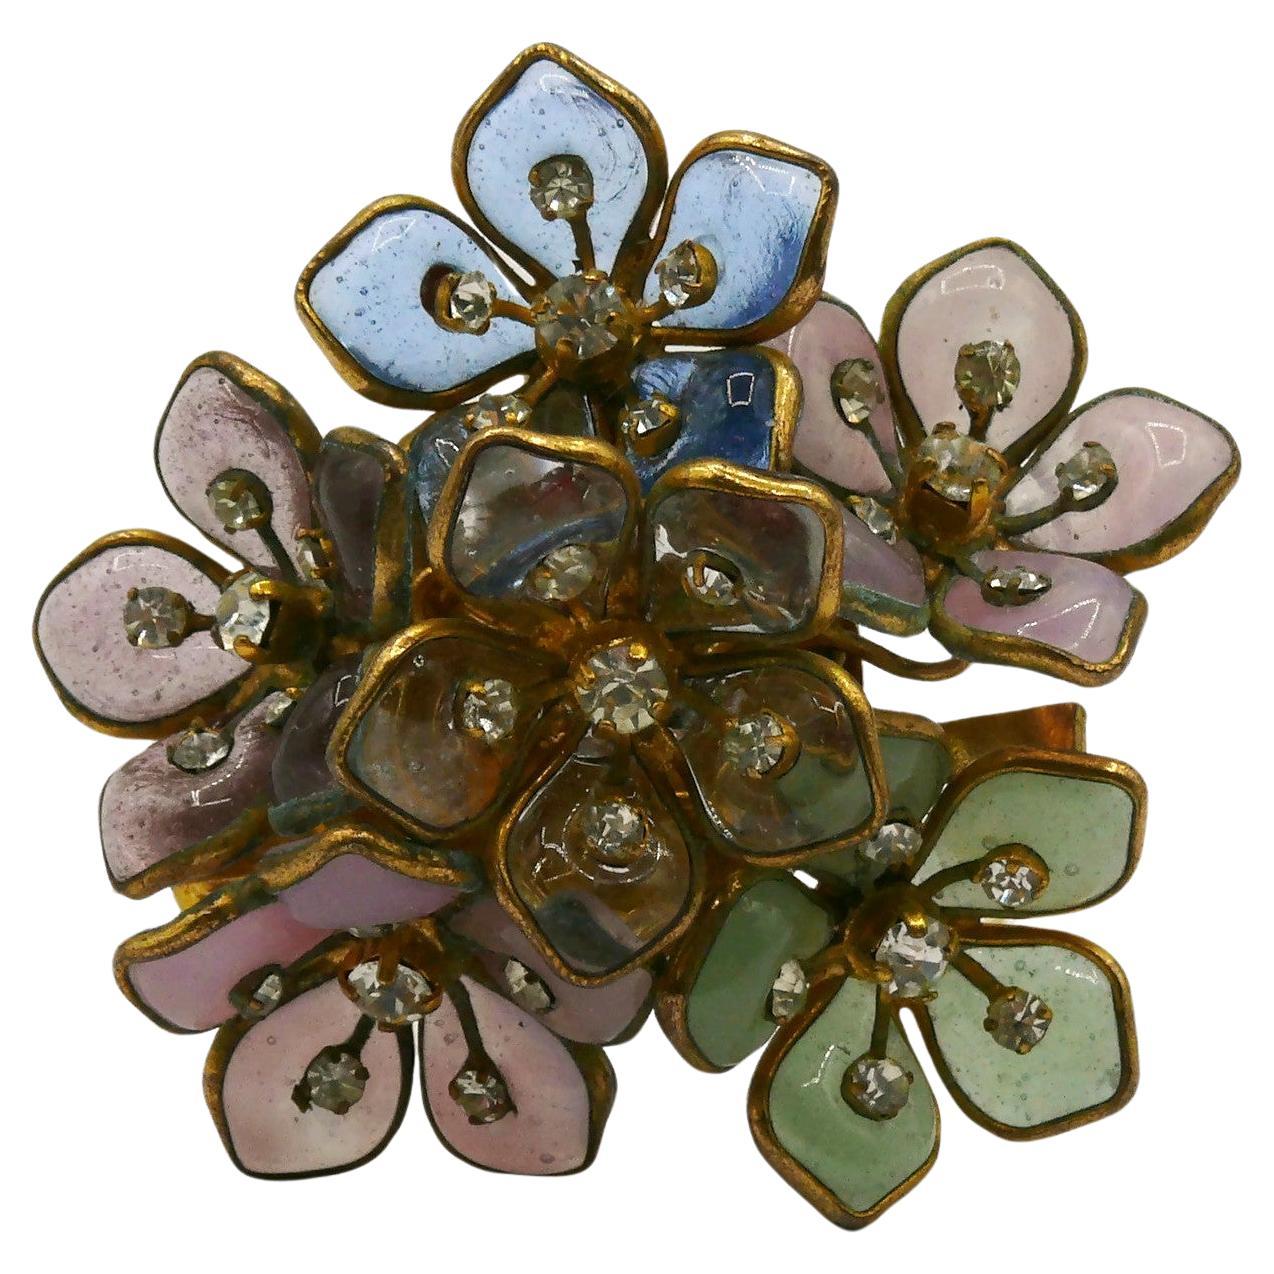 CHANEL Vintage Gripoix Floral Brooch